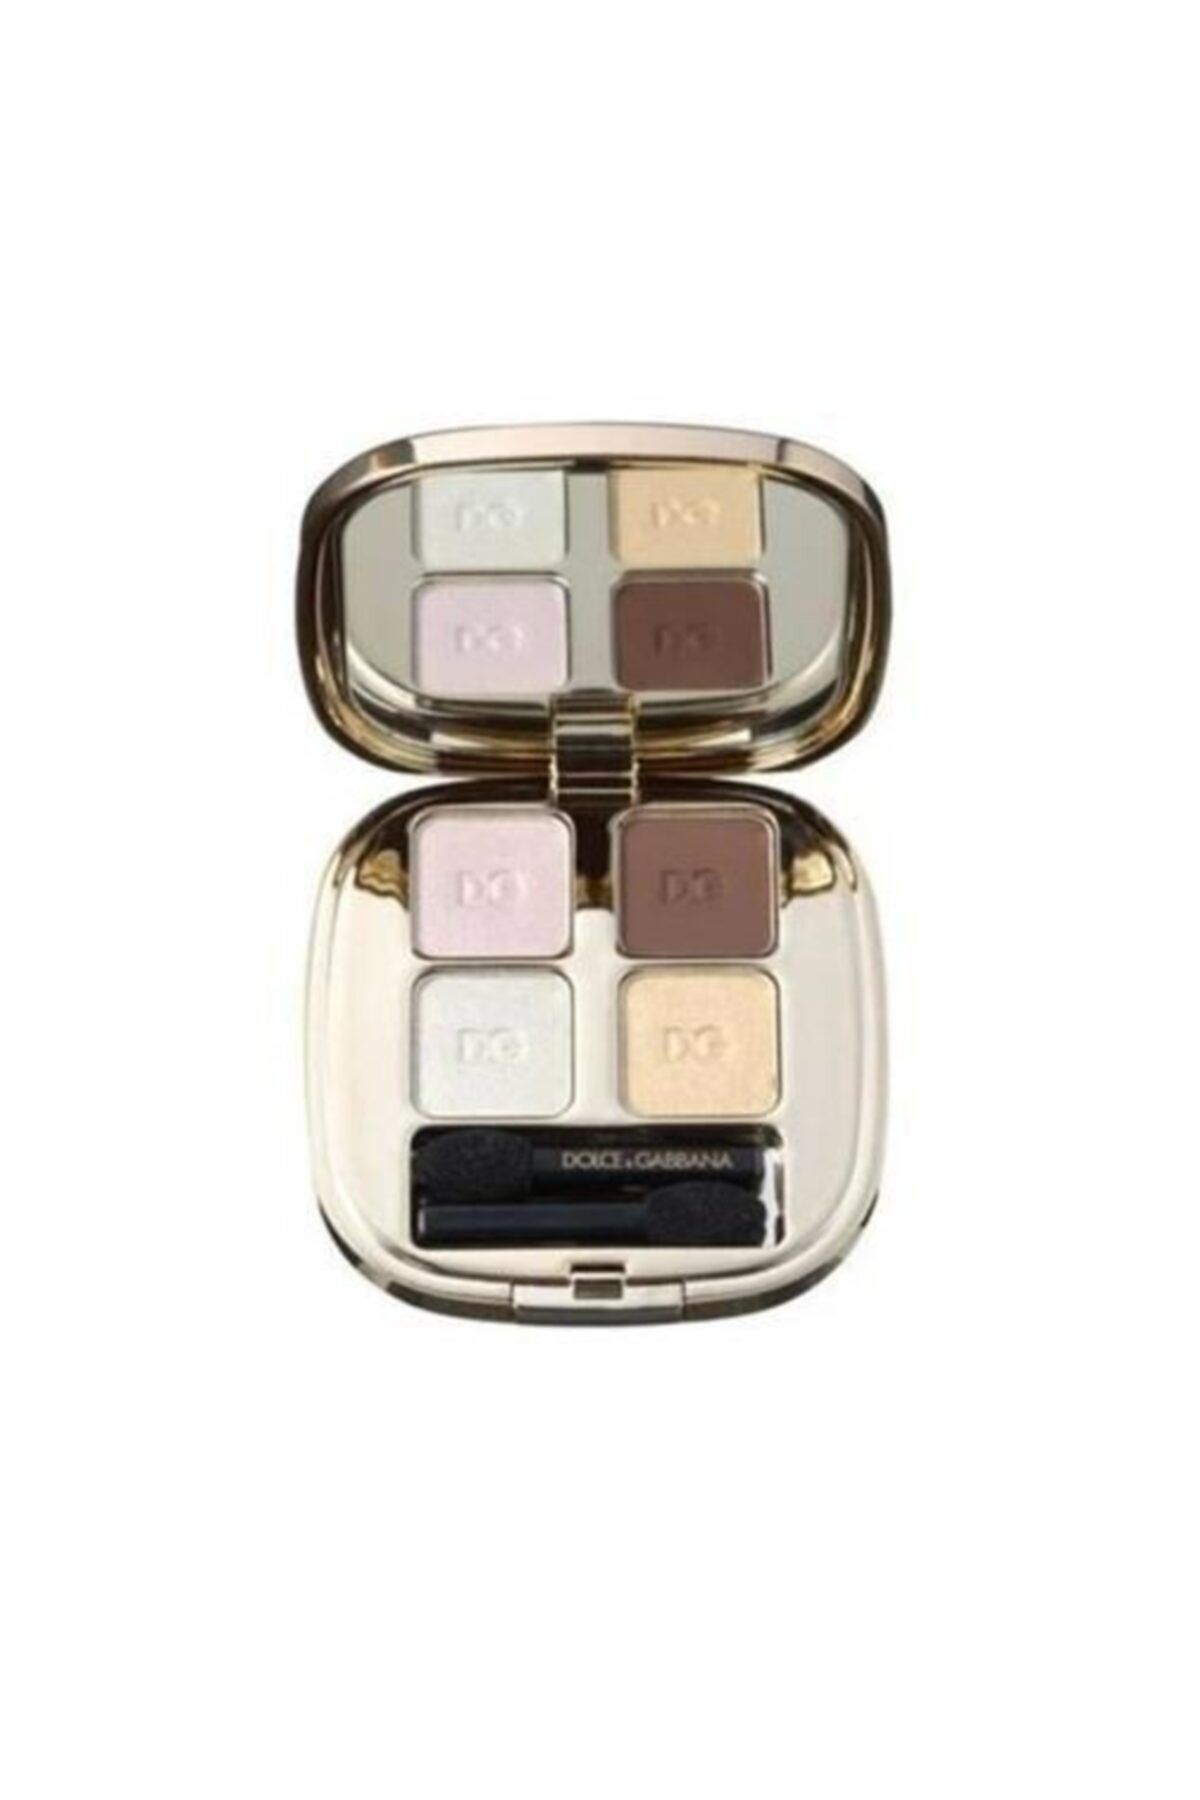 Dolce&Gabbana Smooth Eye Colour Quad Göz Farı 125 Golds